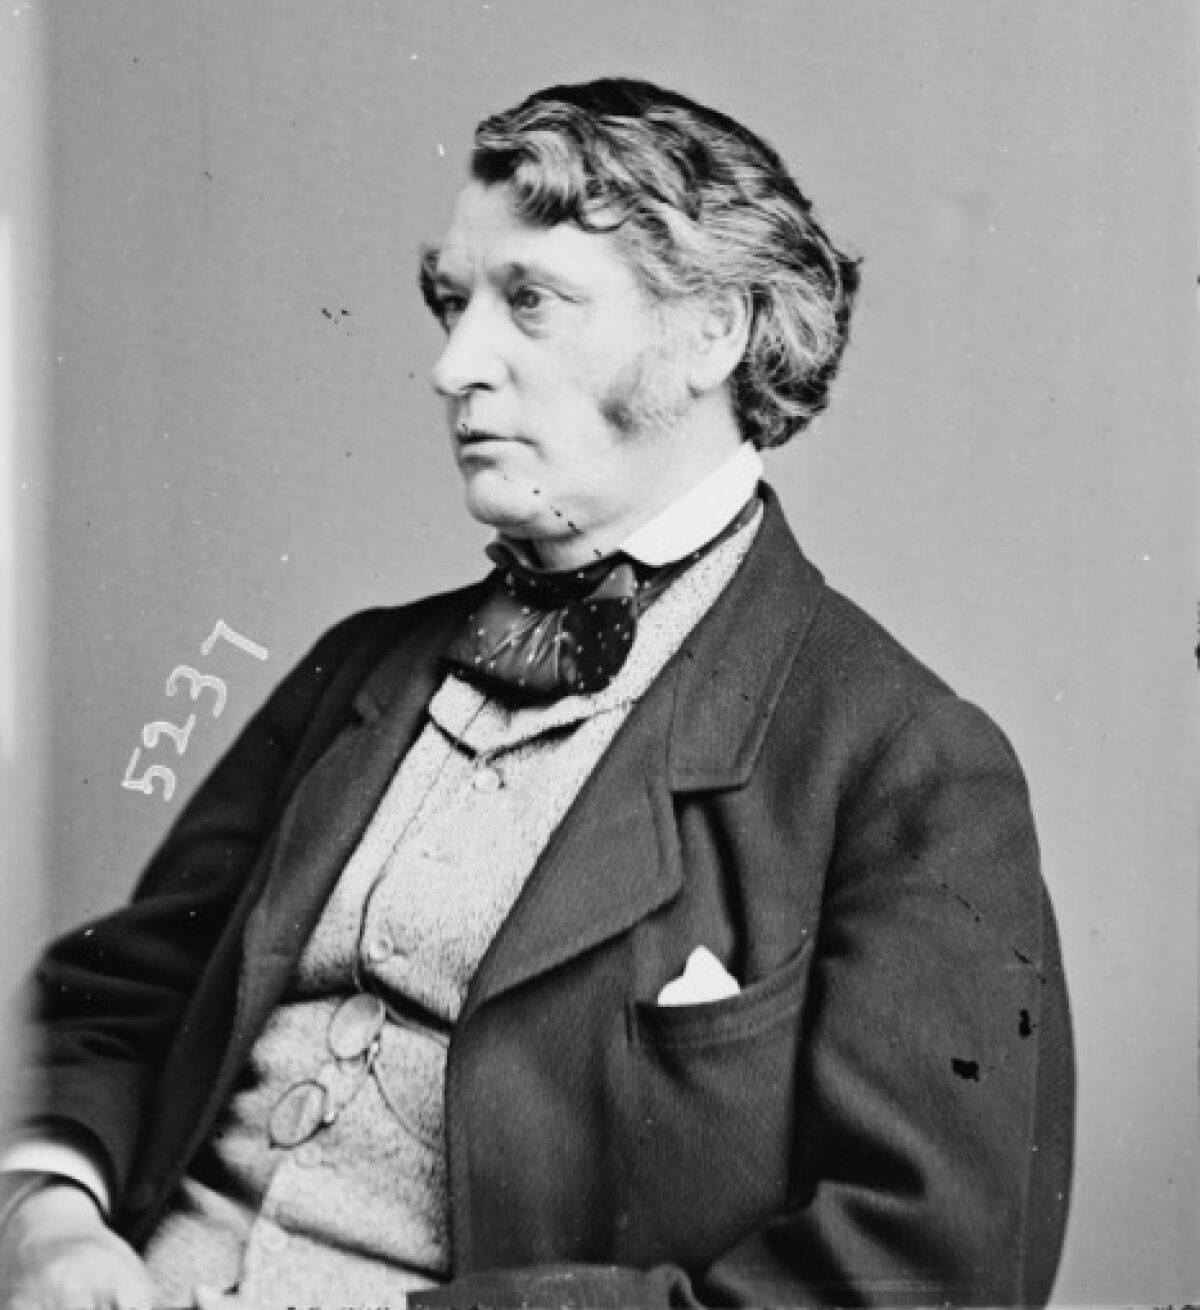 A portrait of Sen. Charles Sumner of Massachusetts, who was beaten unconscious on the Senate floor in 1856.